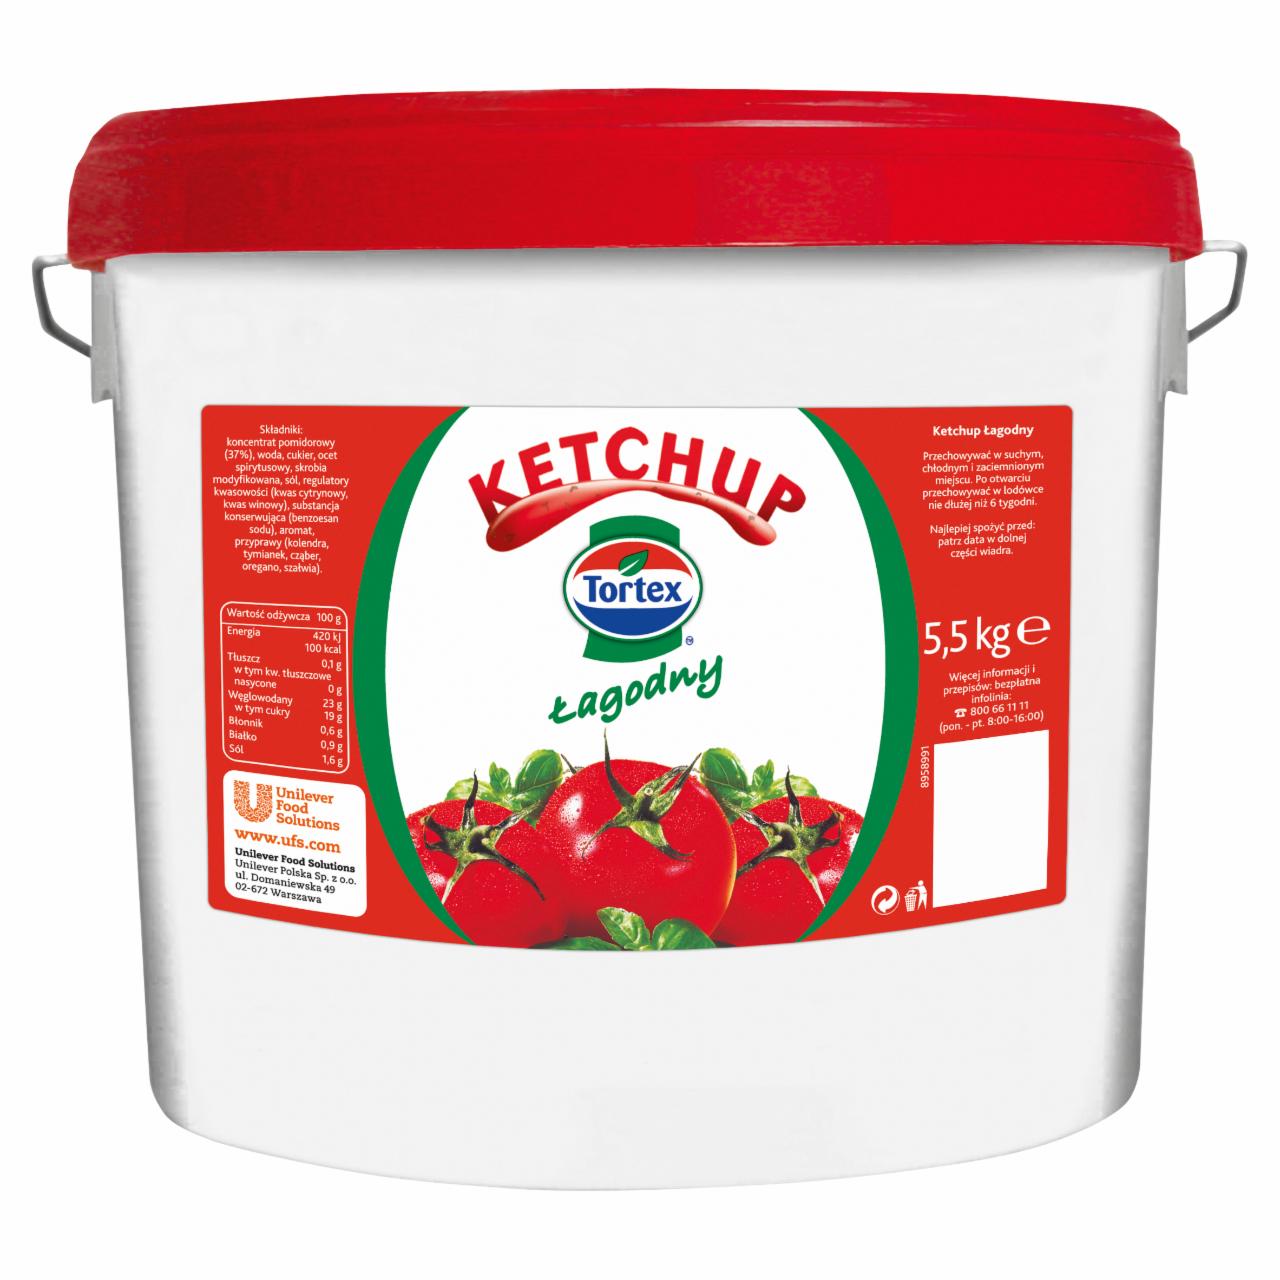 Zdjęcia - Tortex Ketchup łagodny 5,5 kg